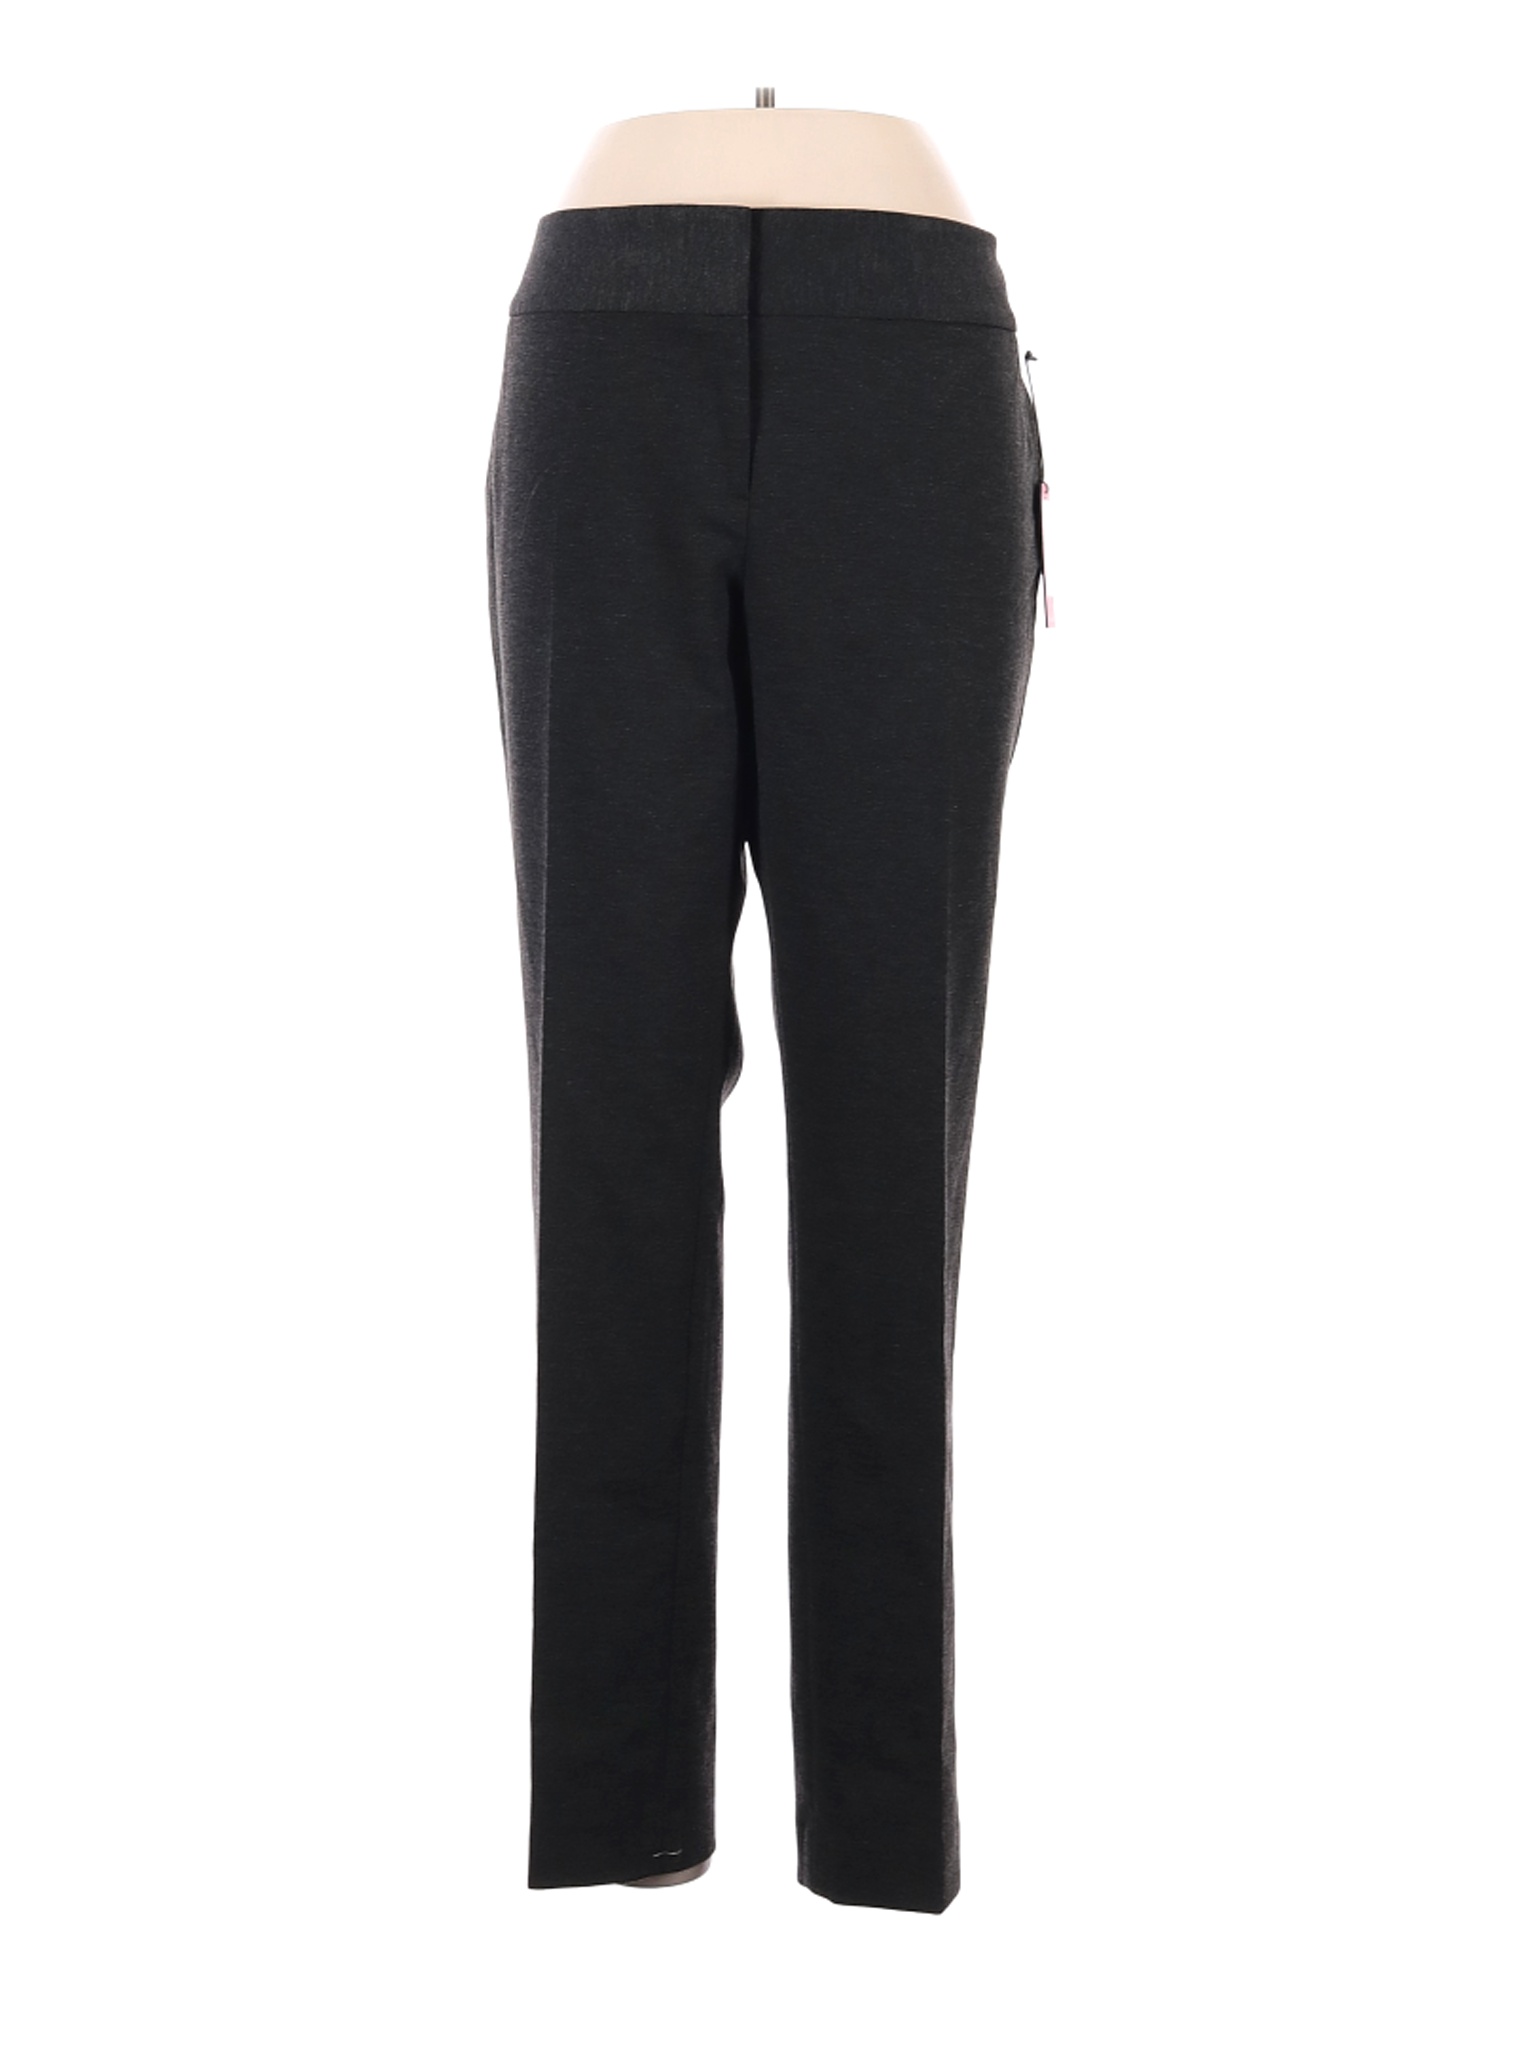 NWT Vince Camuto Women Black Casual Pants 12 | eBay